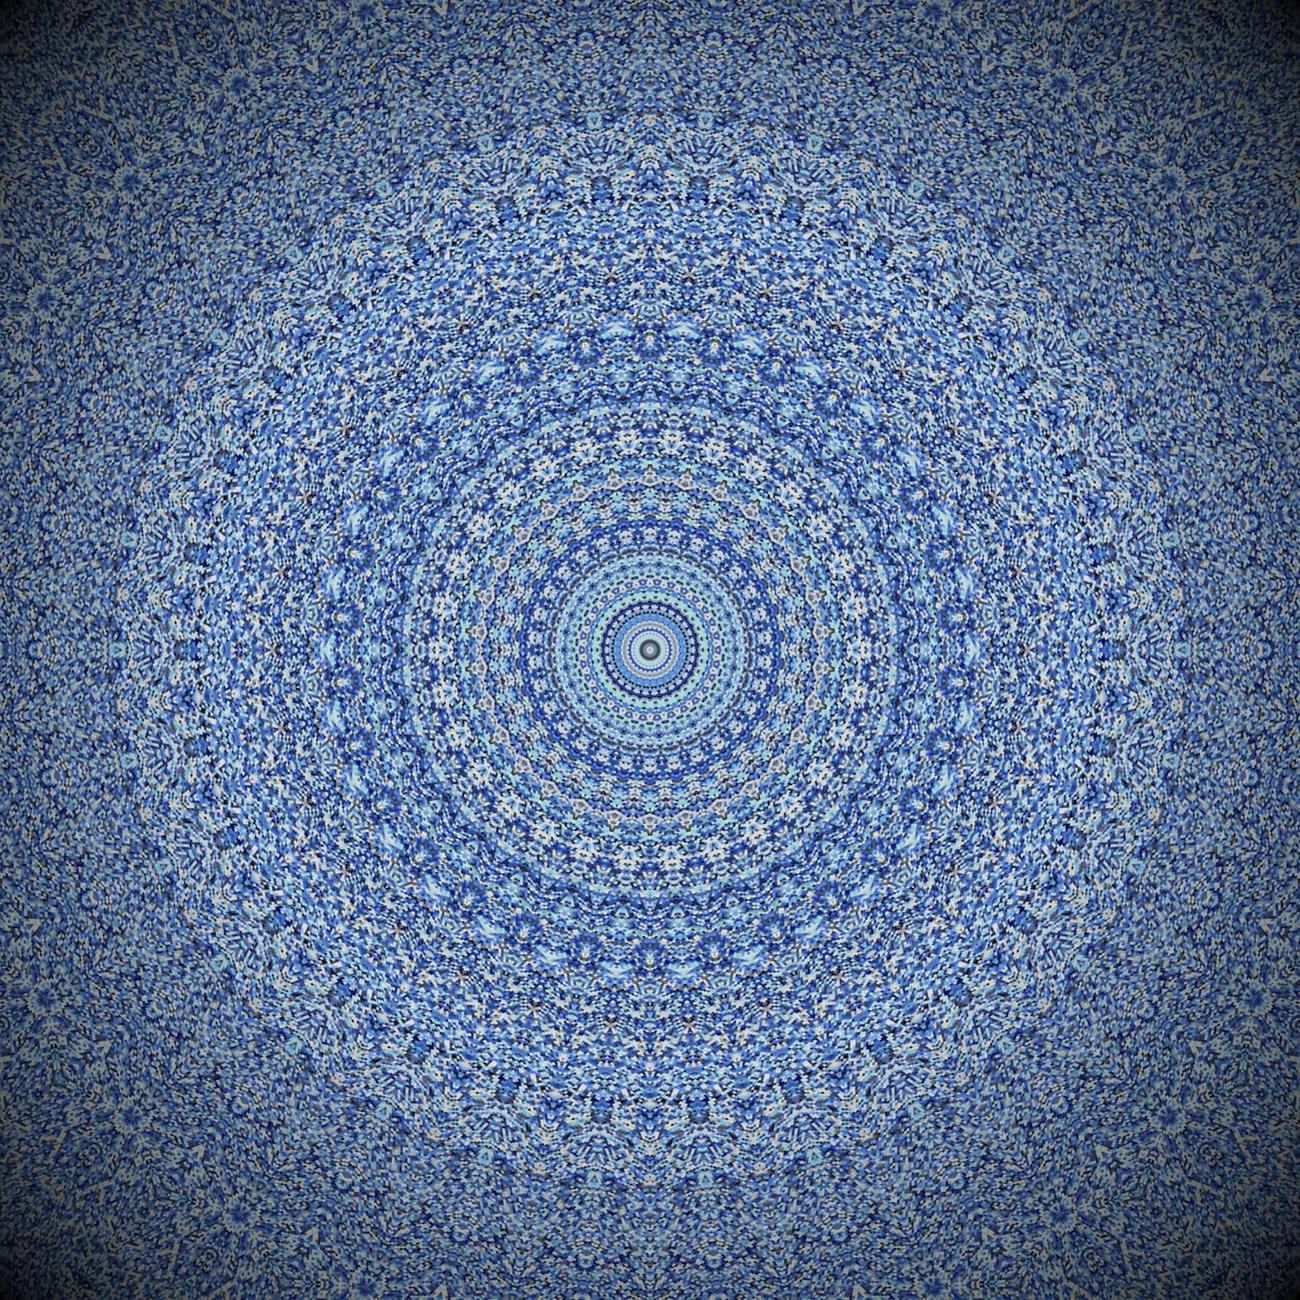 Free blue mandala art image